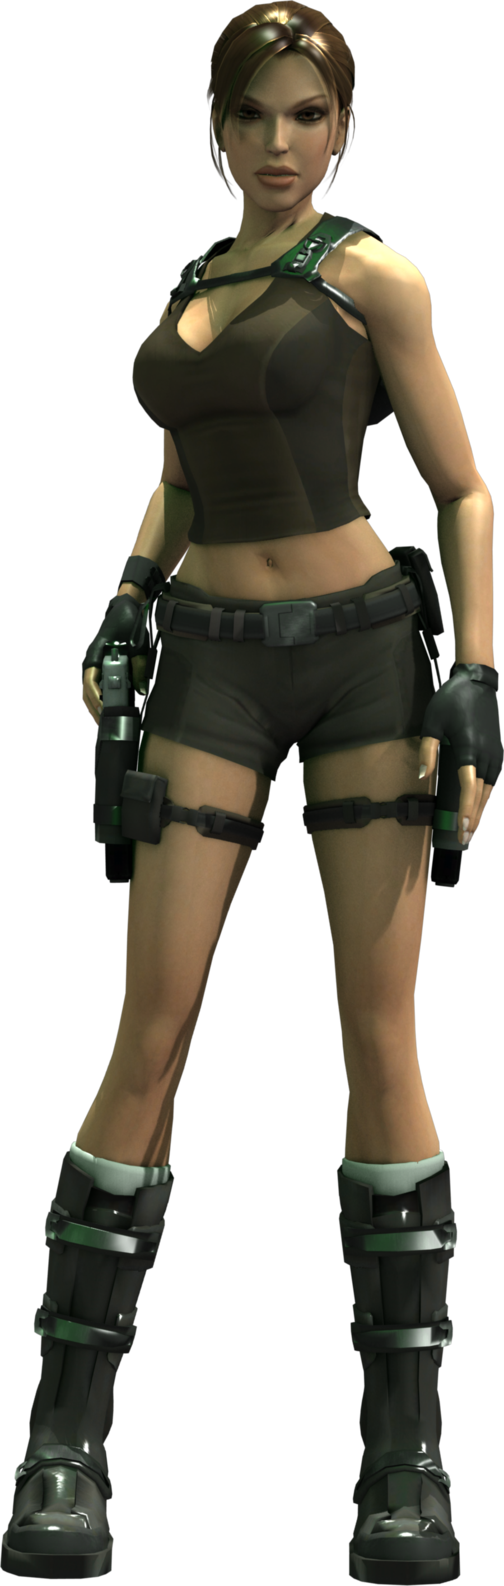 Lara Croft Images Lara Croft Hd Wallpaper And Background Photos - Lara Croft, Transparent background PNG HD thumbnail